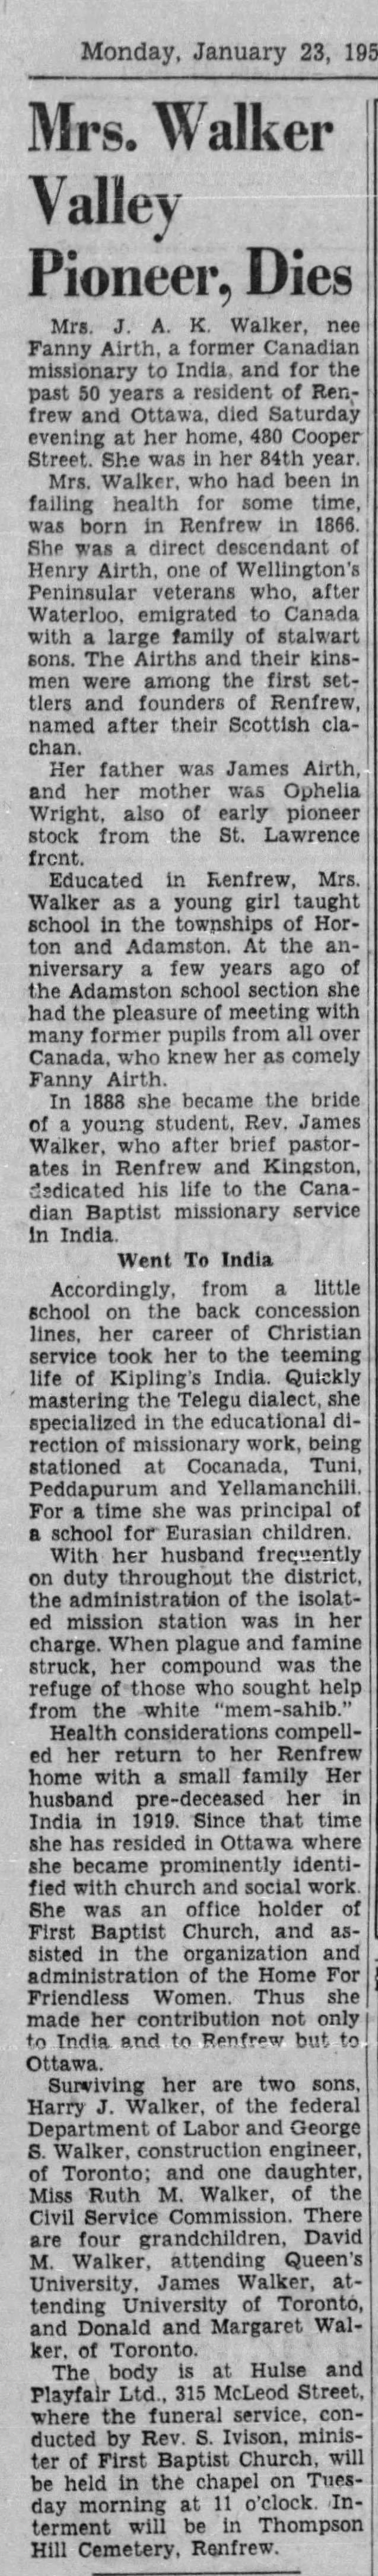 Obituary of Fanny Airth Walker - The Ottawa Citizen, 23 Jan 1950, Mon. Pg 7